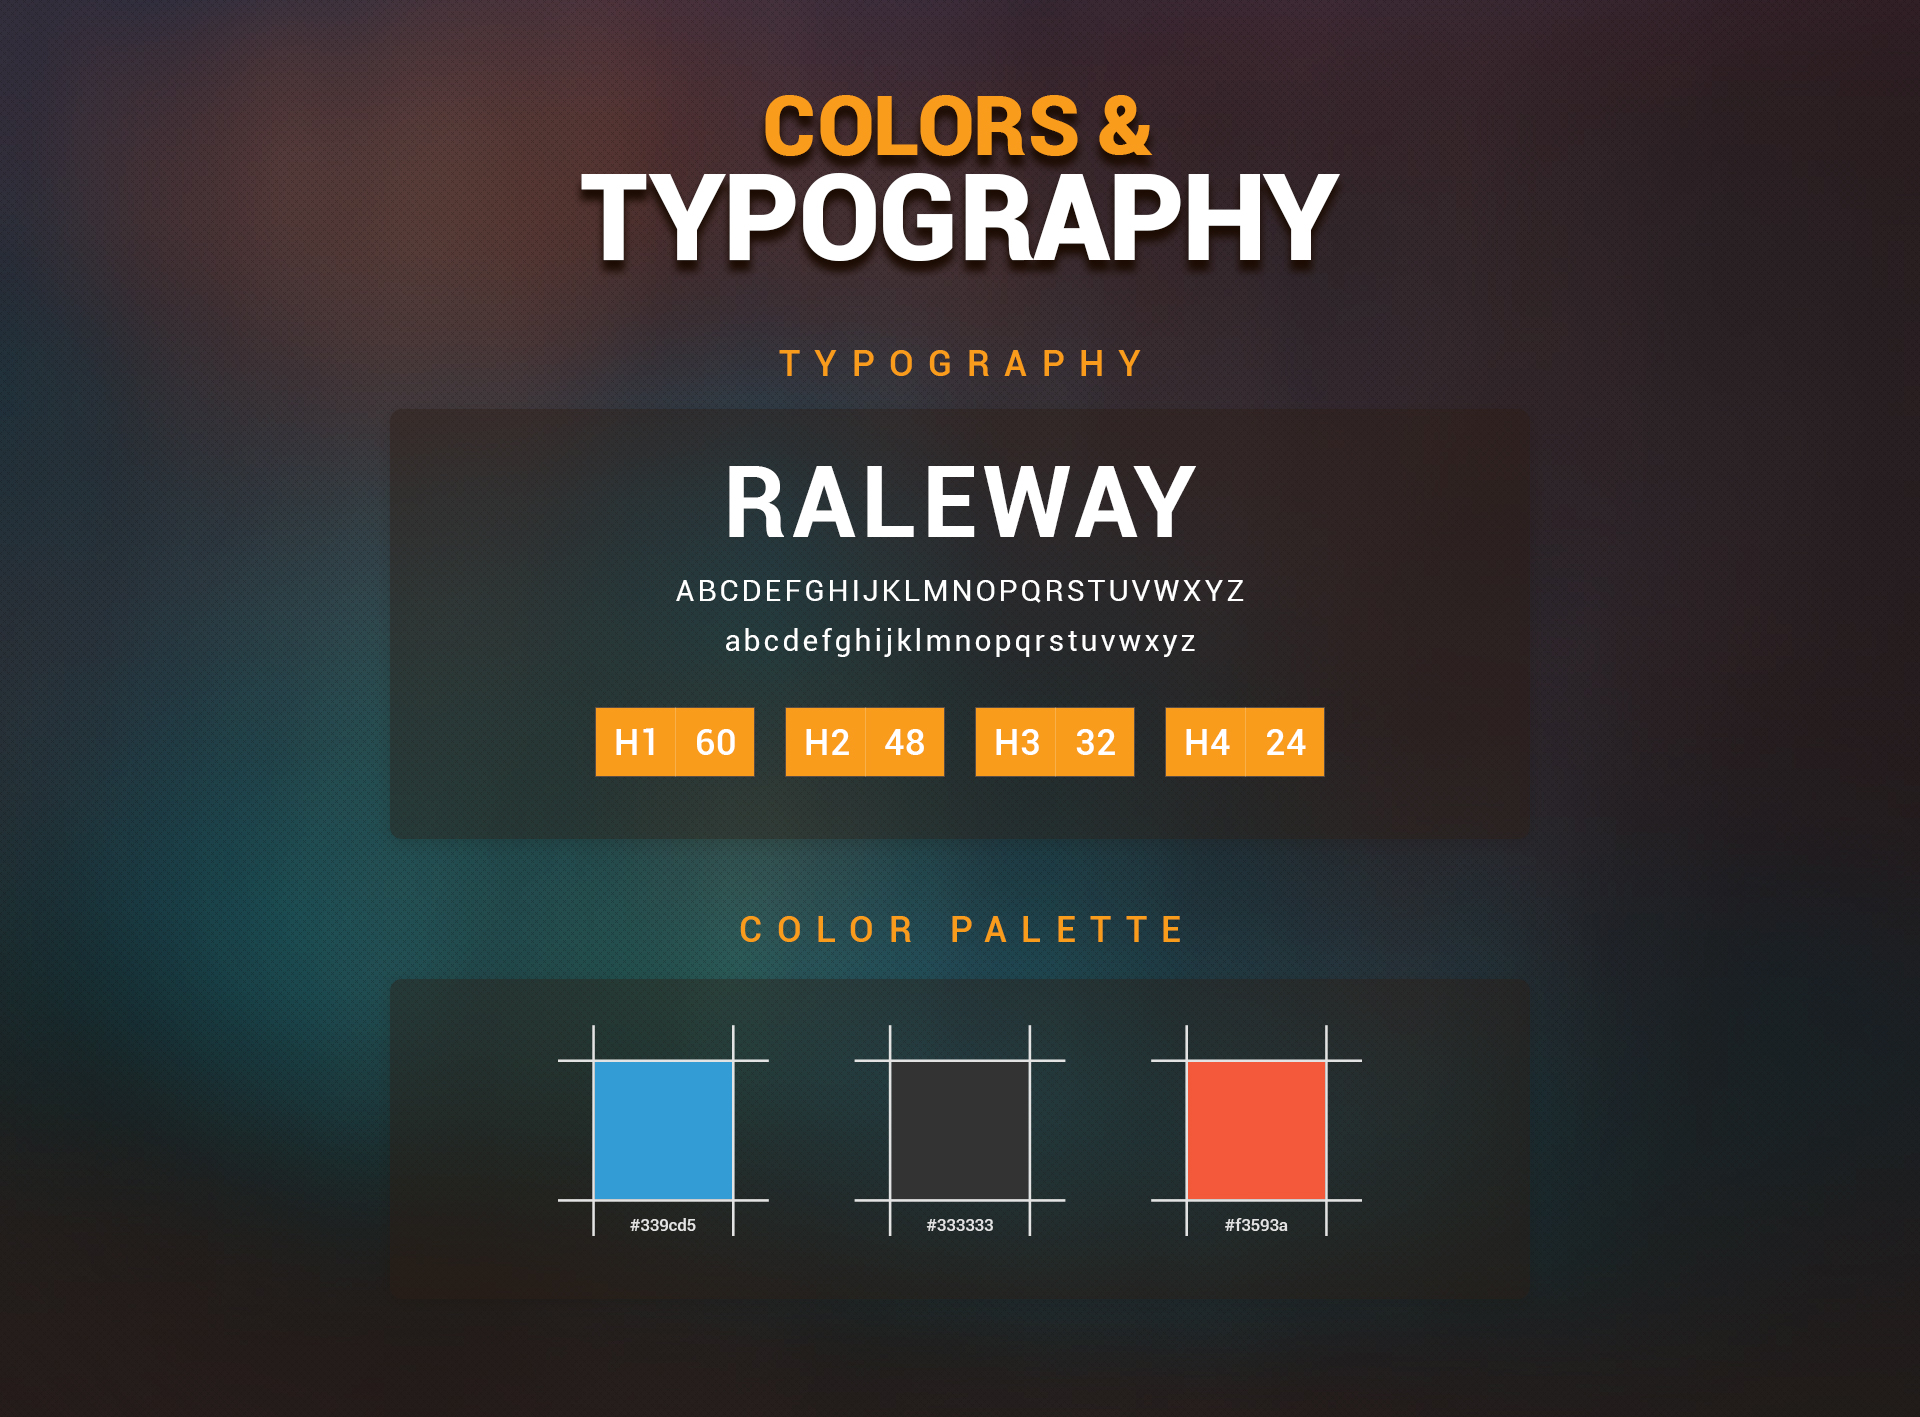 Colors & Typography